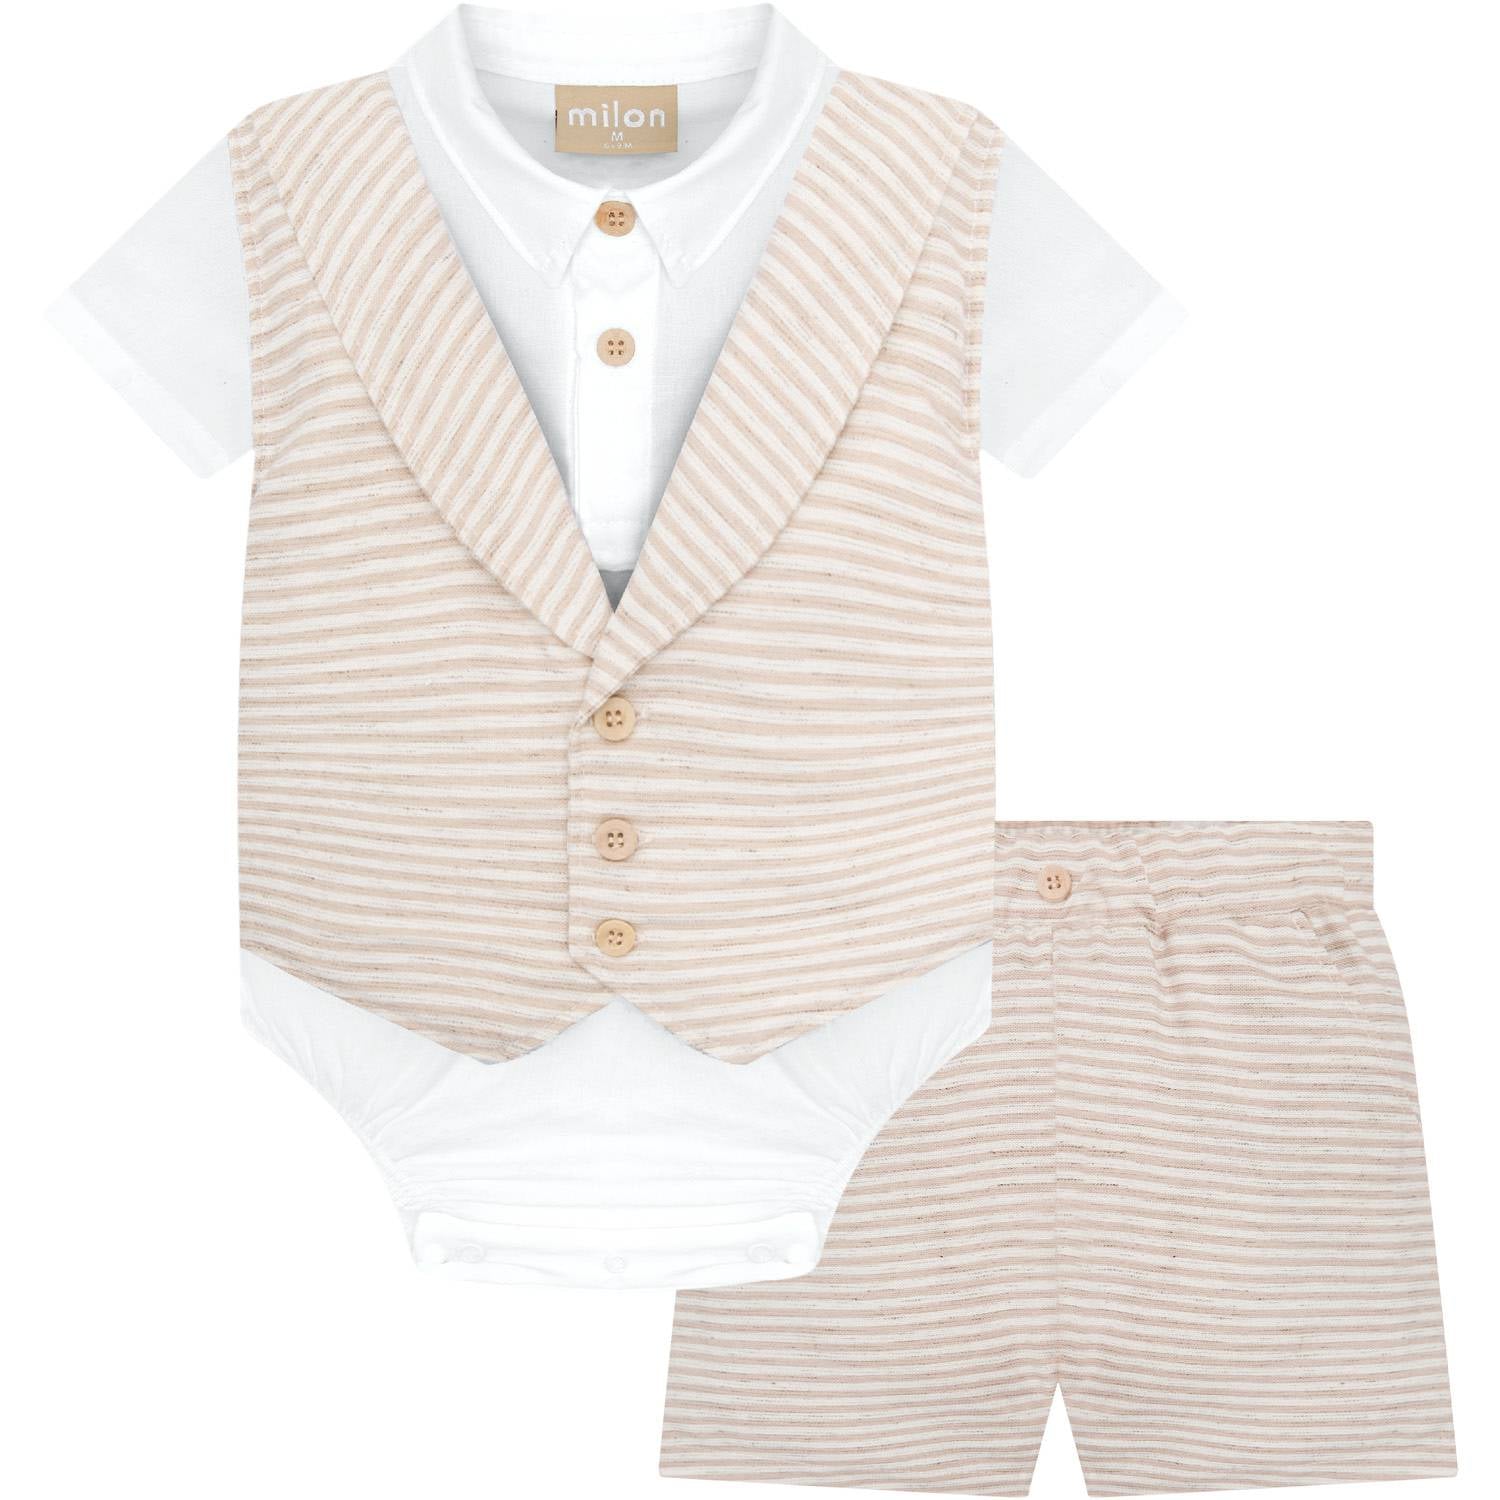 Tan Striped Button Down Shirt, Vest & Shorts Set